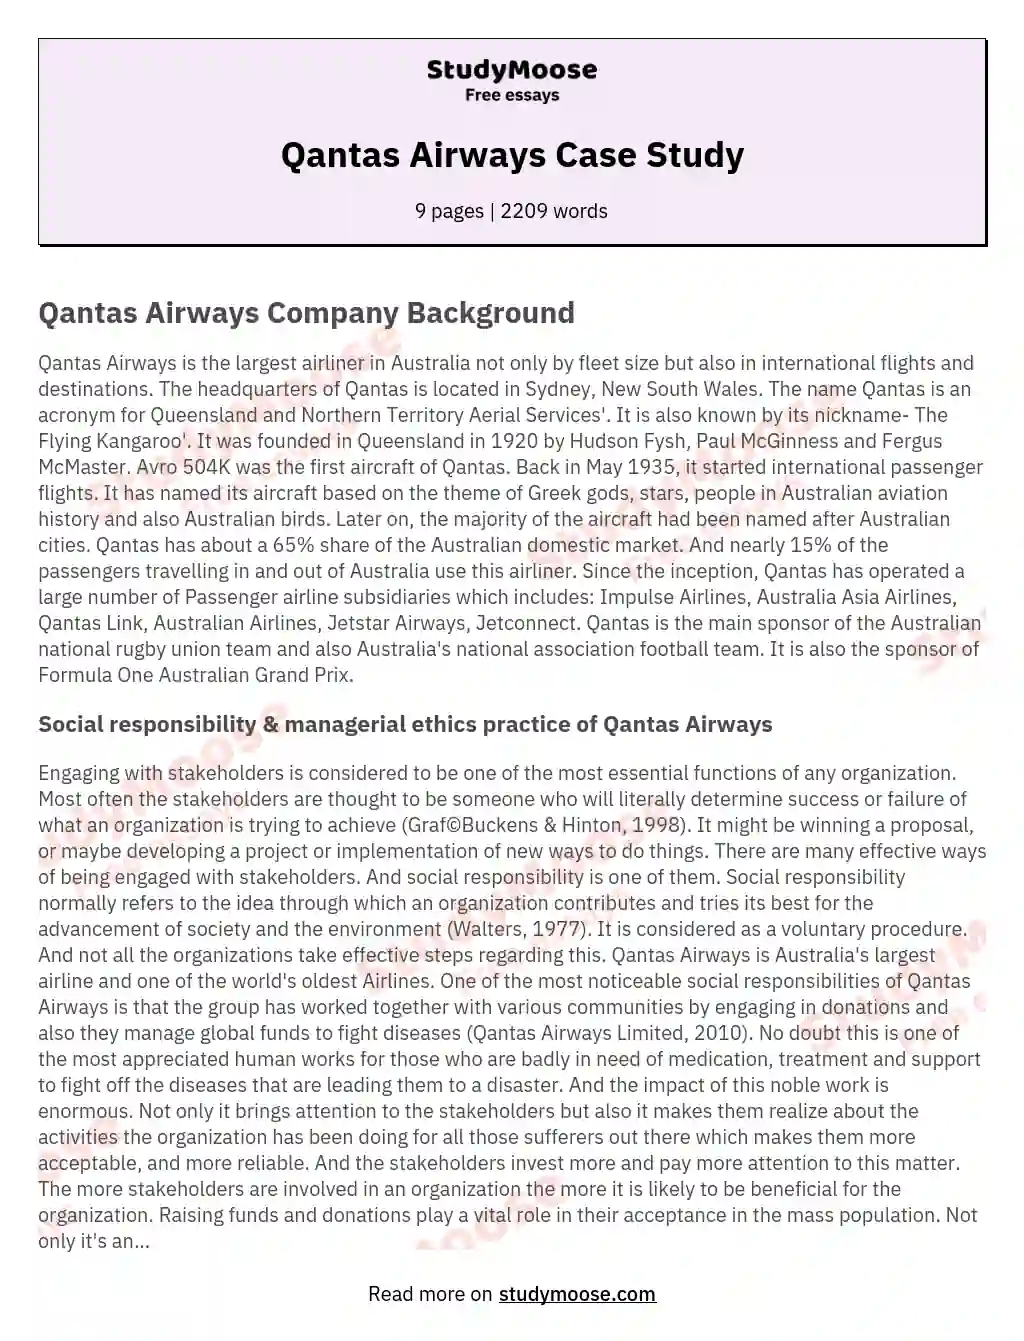 Qantas Airways Case Study